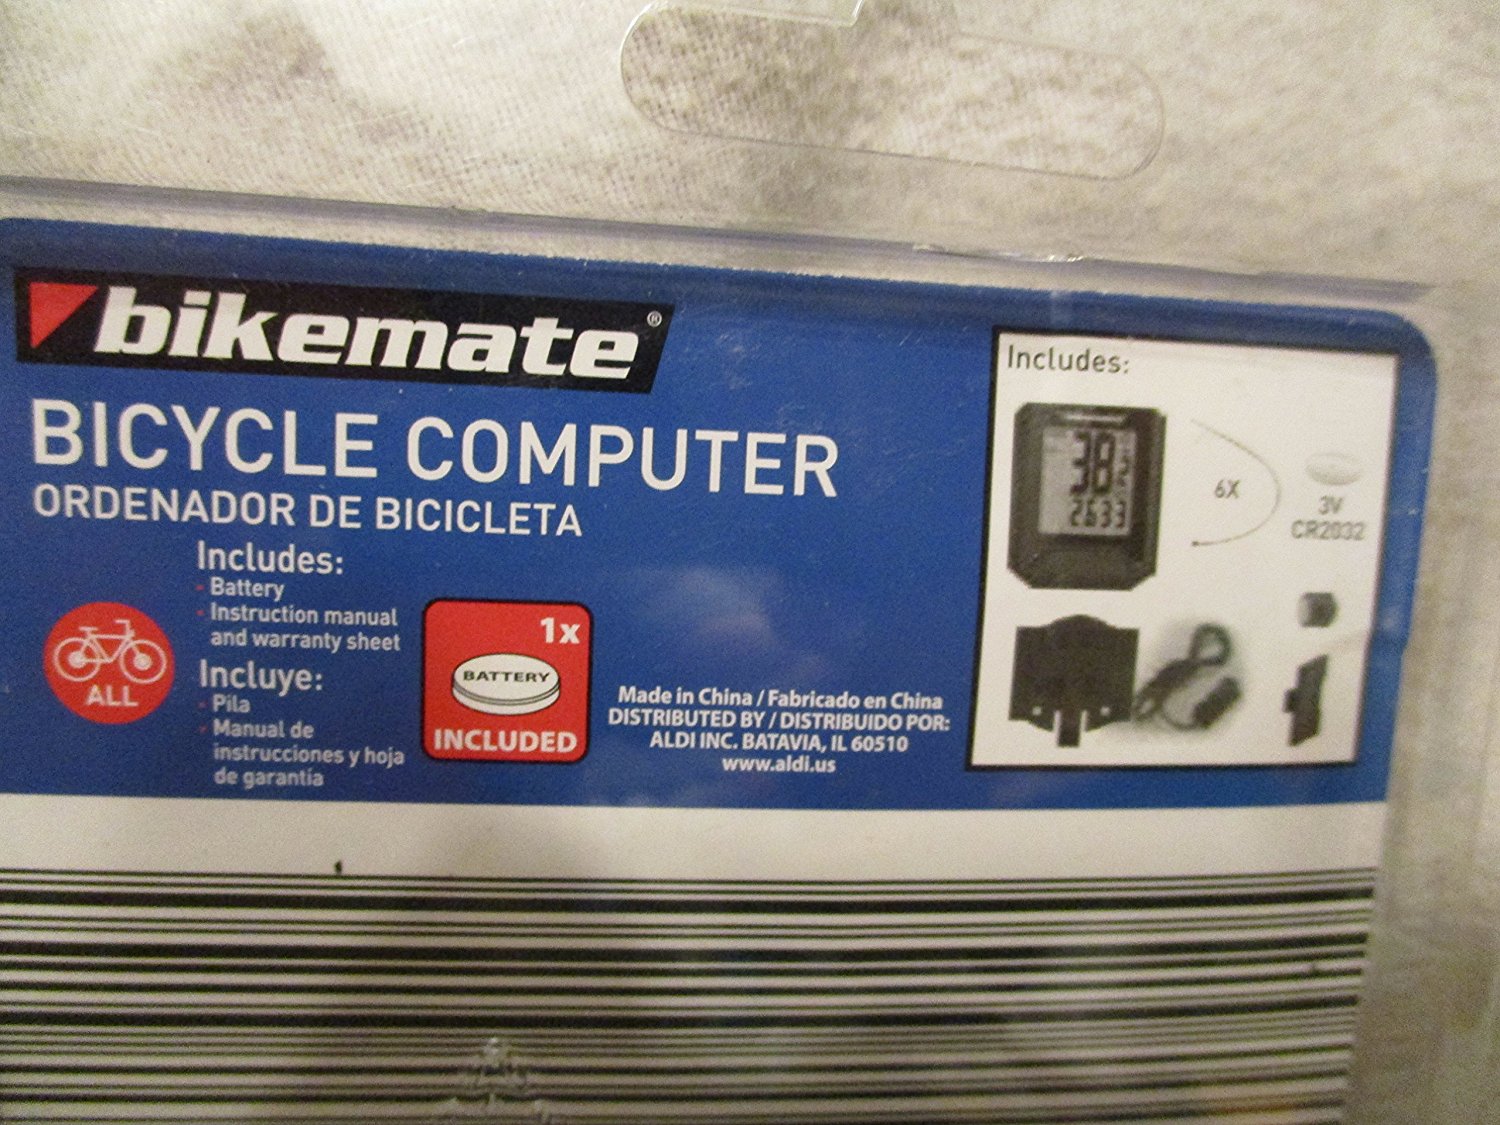 bikemate bicycle computer